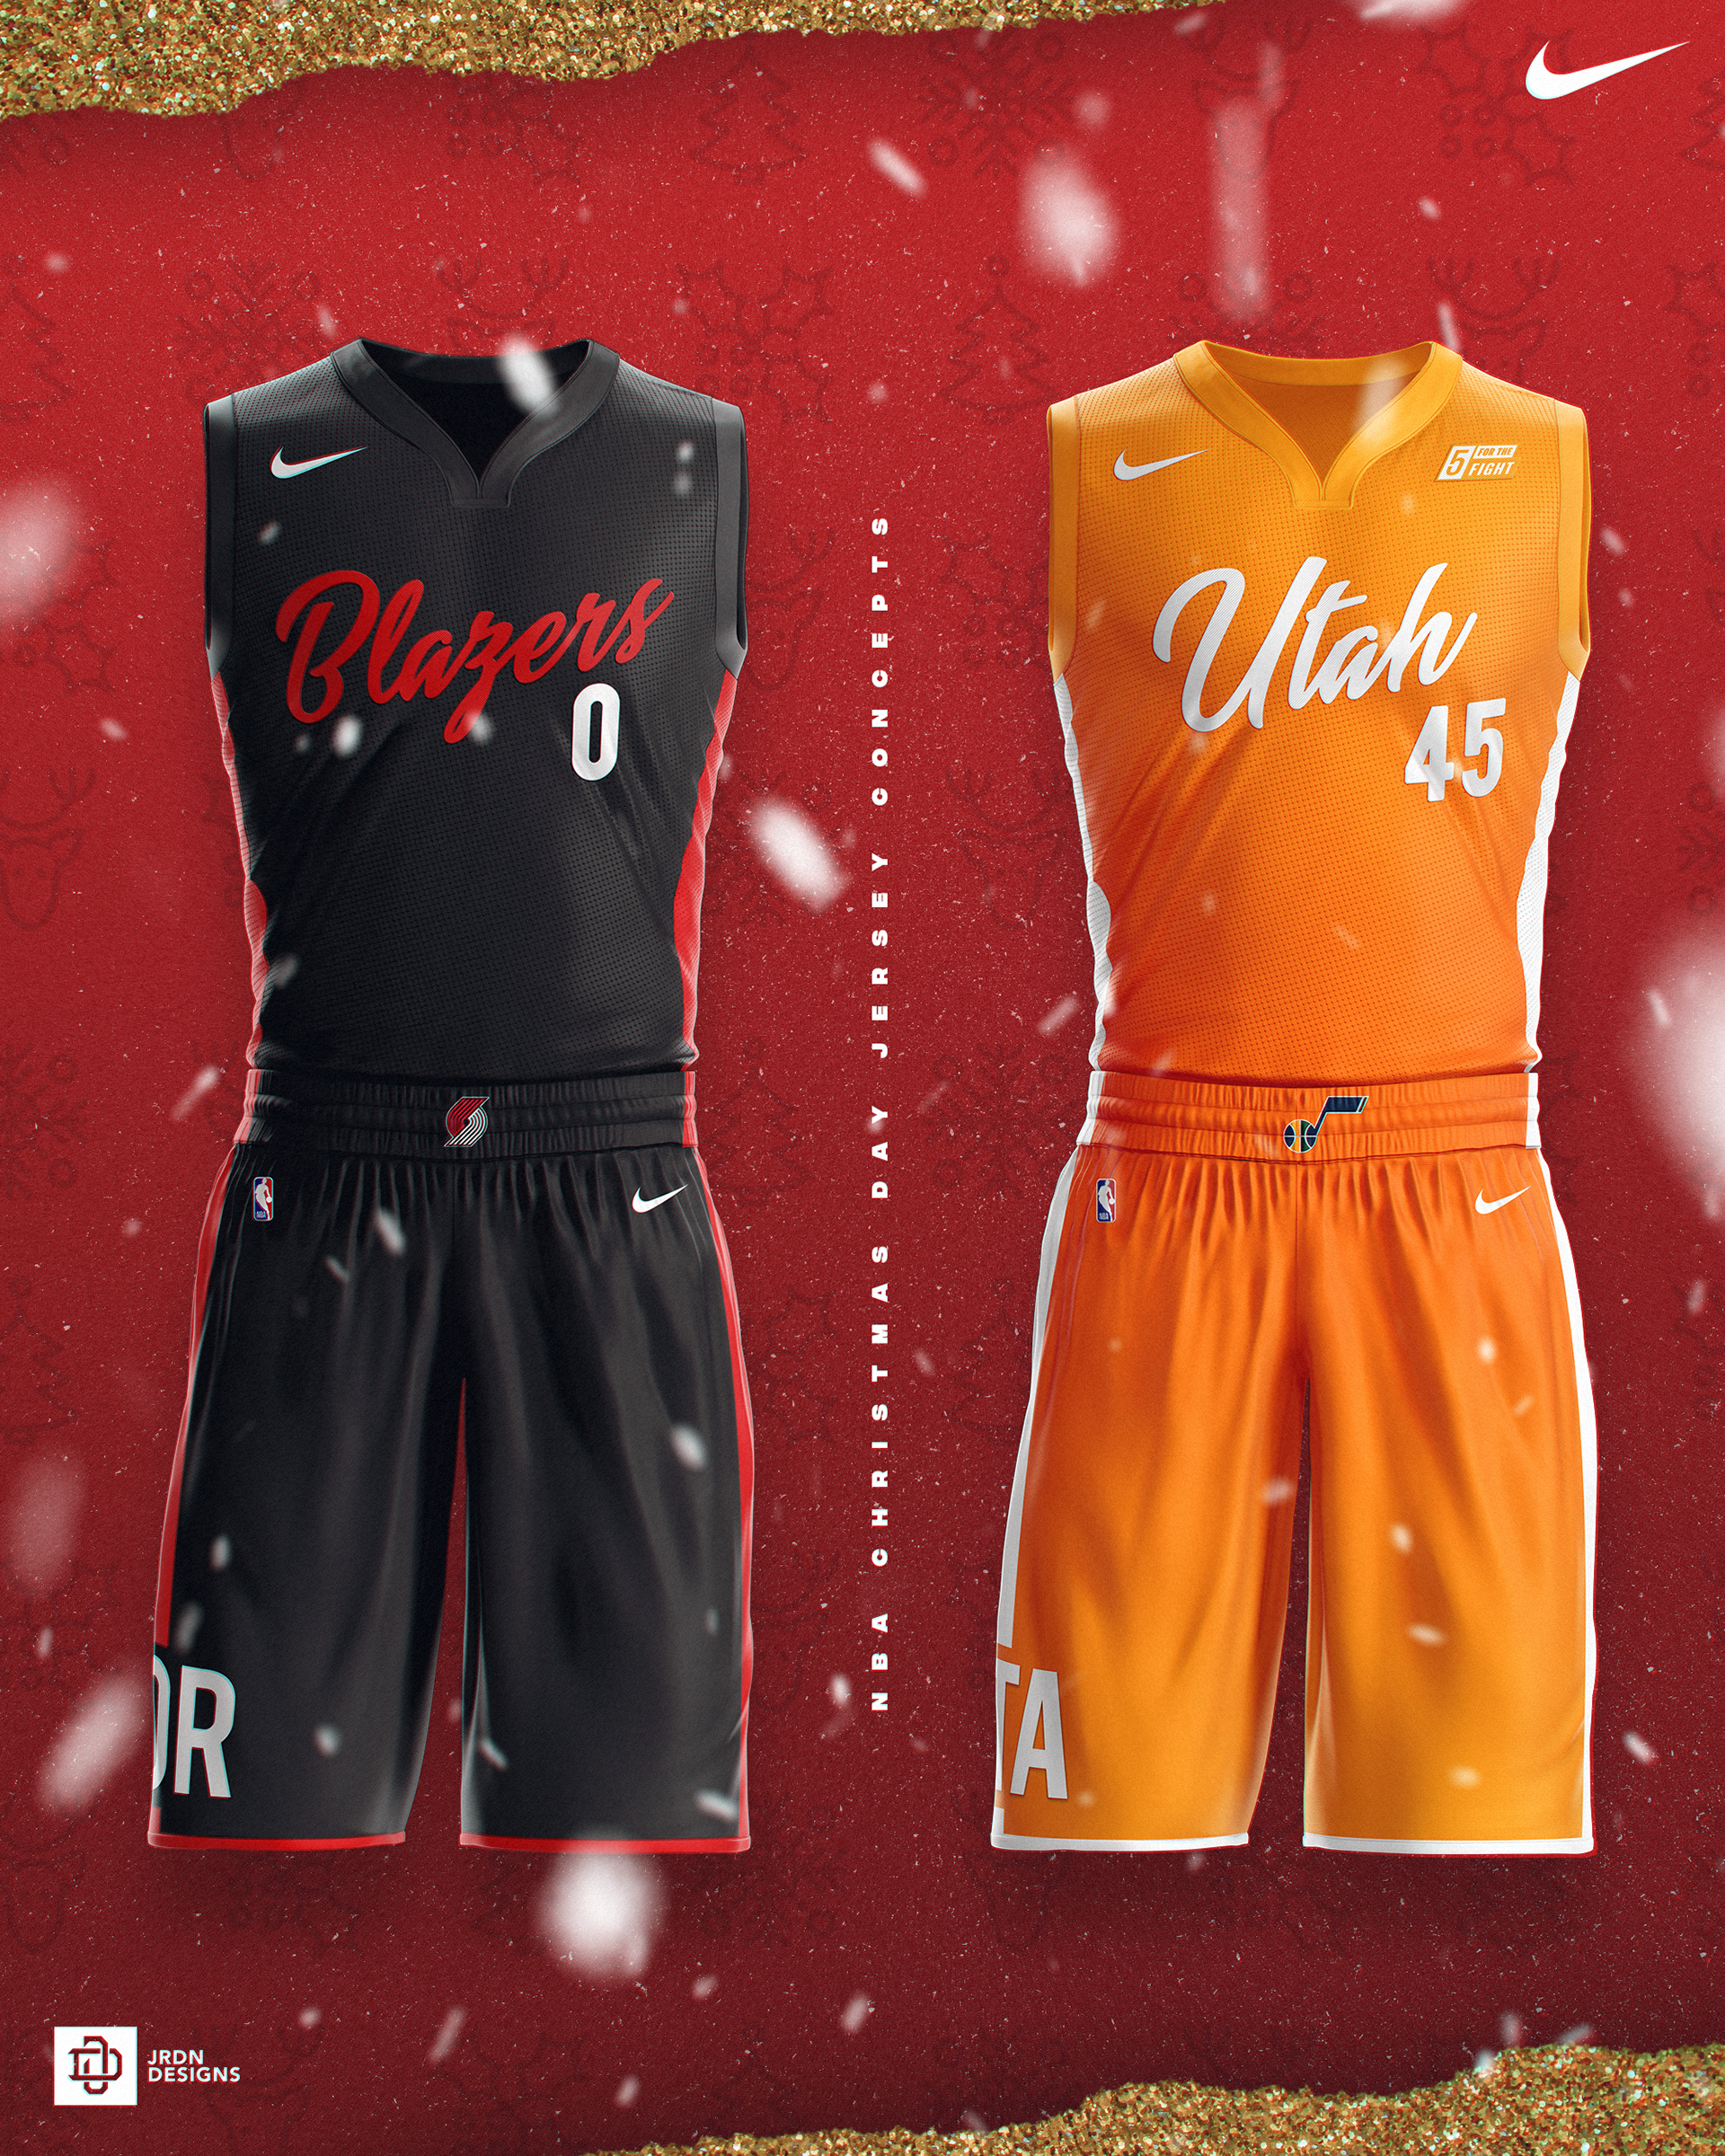 SRELIX Portfolio - NBA 2020 Christmas Jersey Concepts